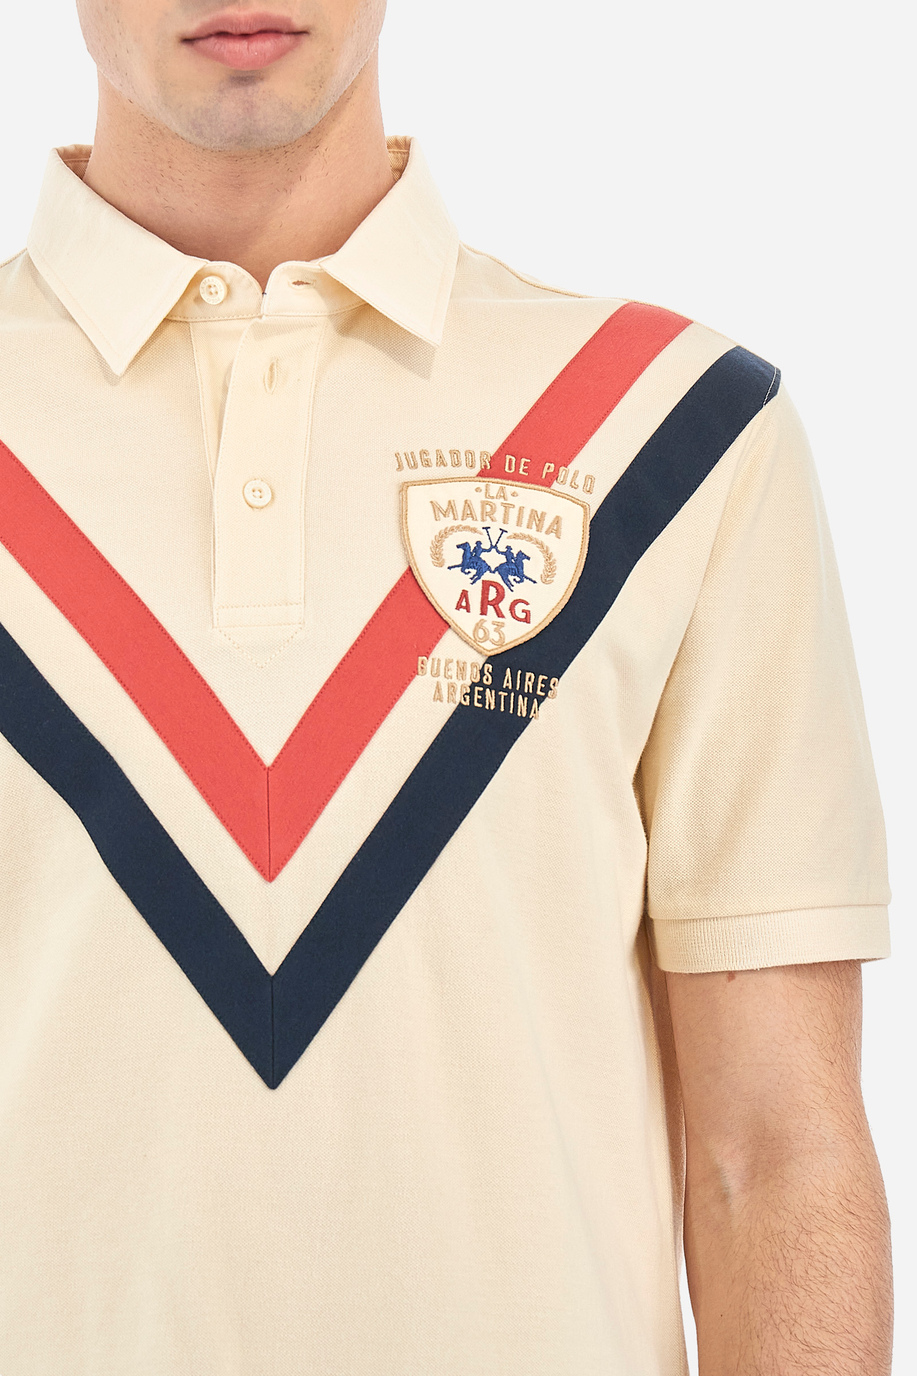 Regular fit 100% cotton short-sleeved polo shirt for men - Valoree - Leyendas del Polo | La Martina - Official Online Shop